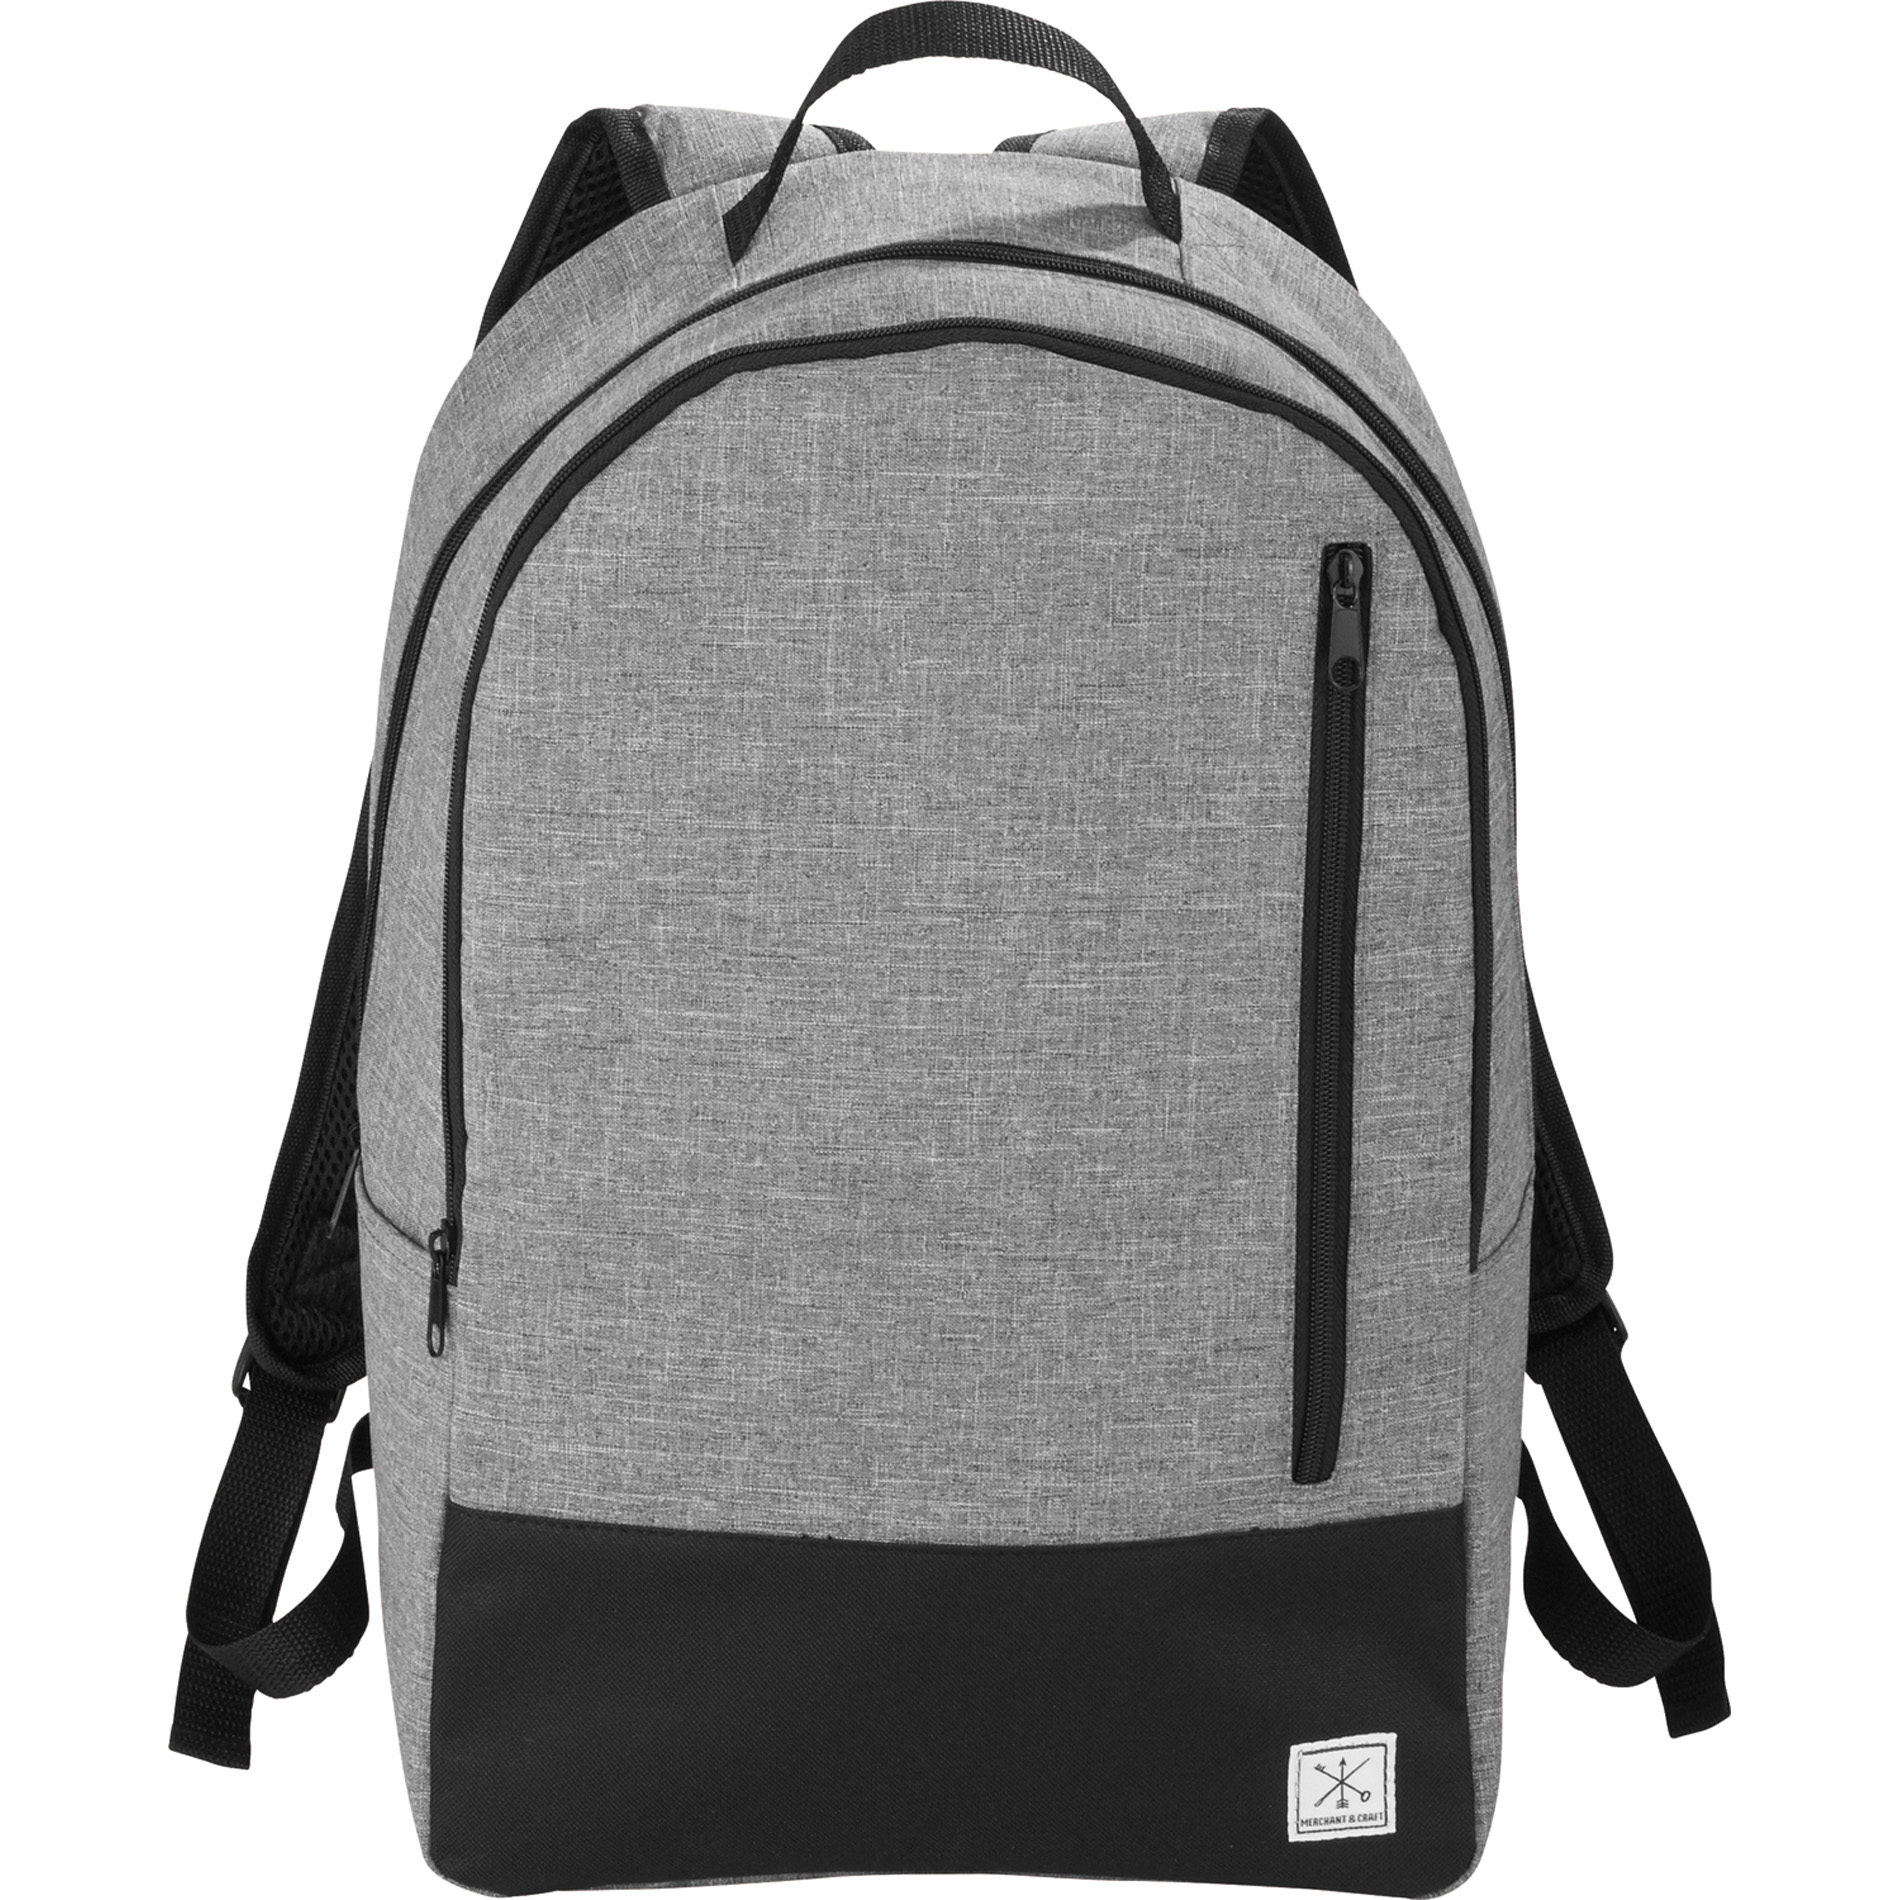 Merchant & Craft 3750-16 - Grayley 15" Computer Backpack